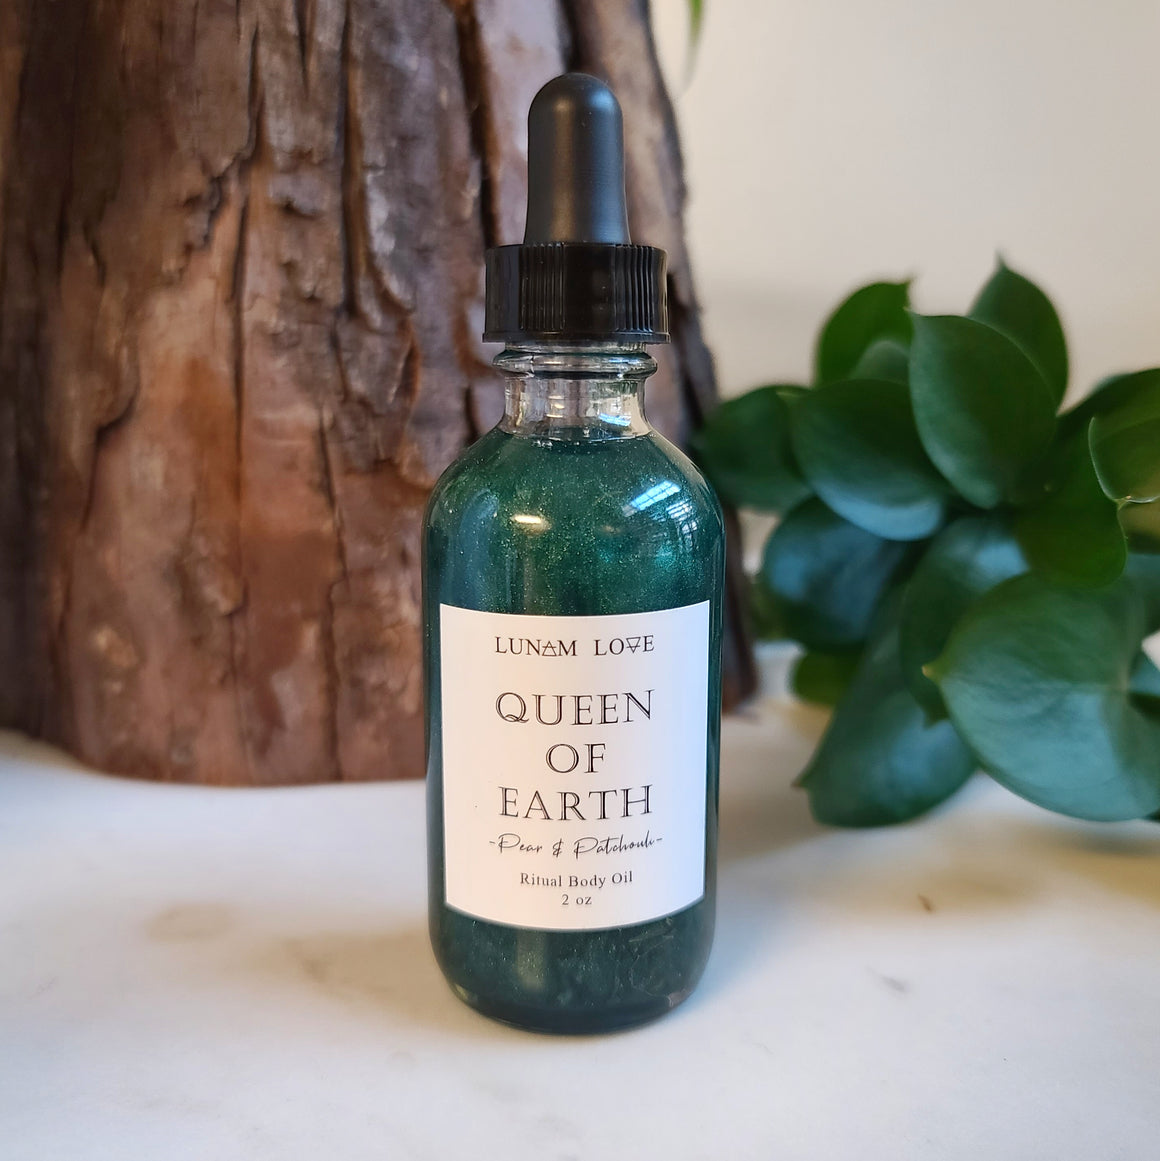 Queen of Earth Ritual Body Oil